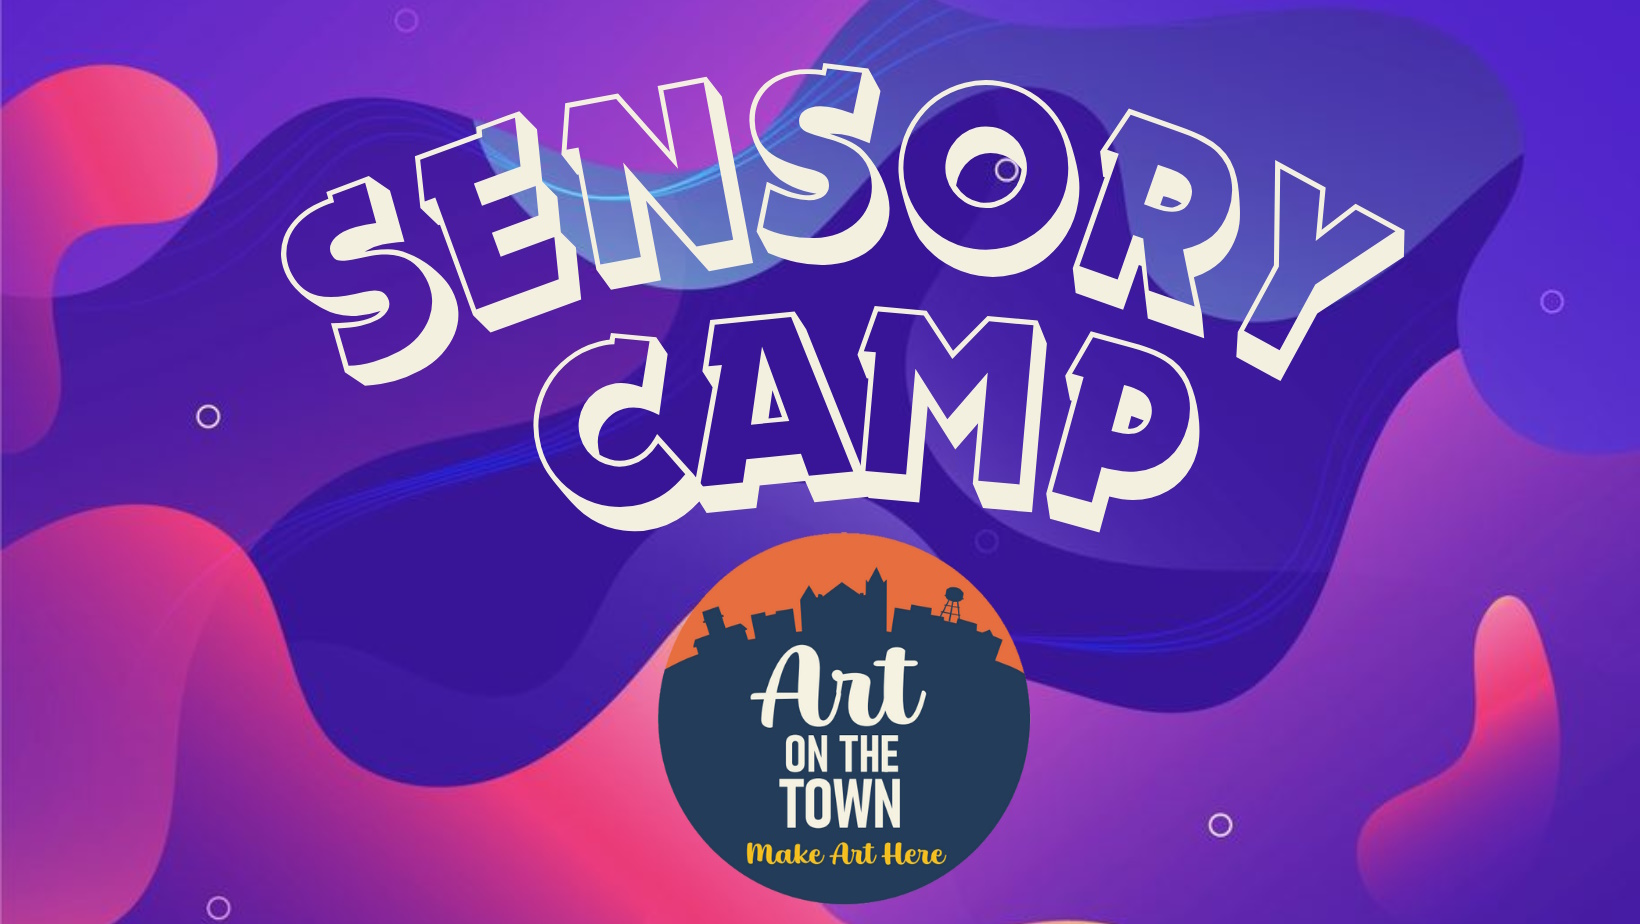 Sensory Camp